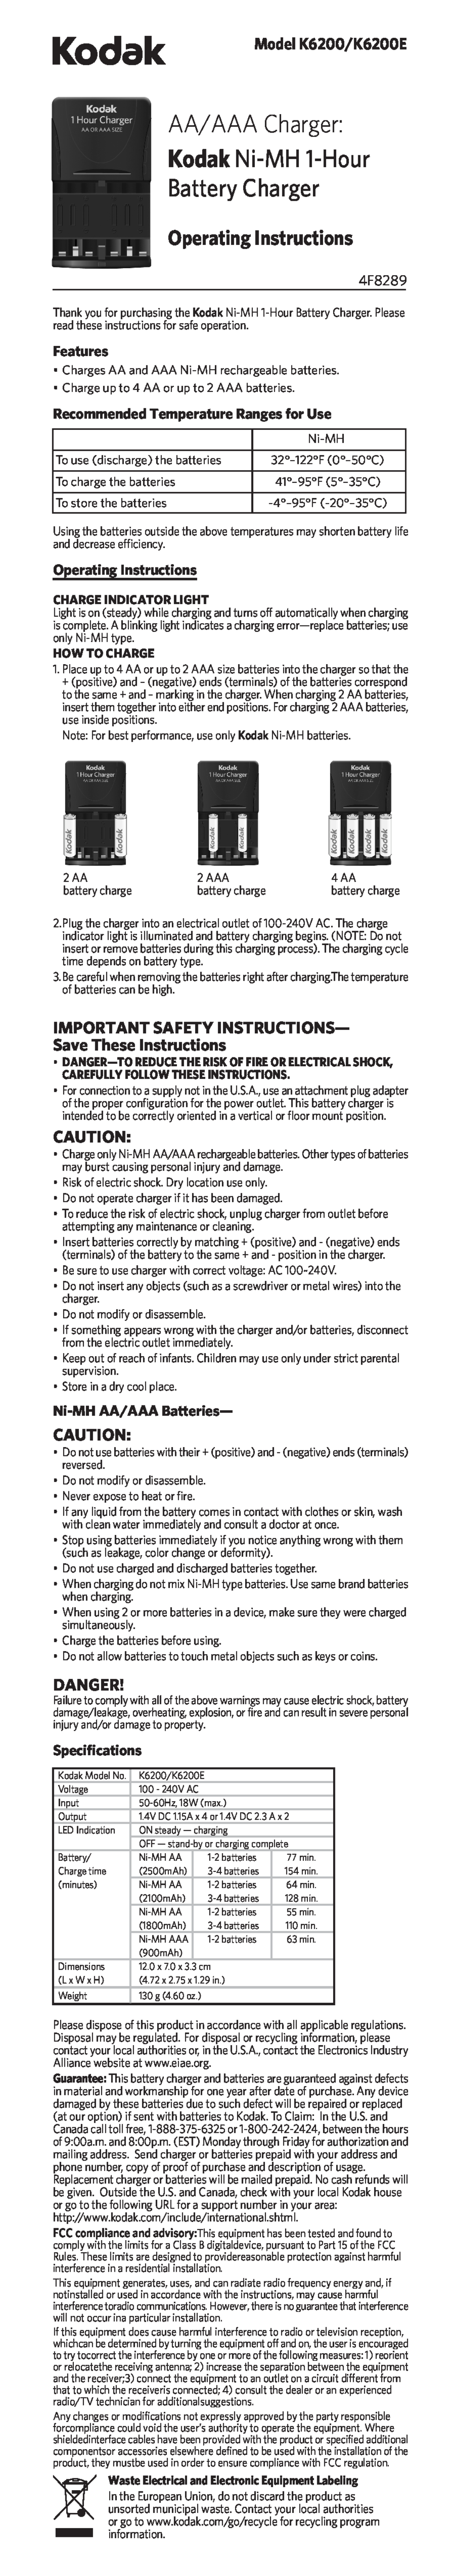 Kodak K6200 operating instructions AA/AAA Charger Kodak Ni-MH 1-Hour Battery Charger, Operating Instructions, Danger 